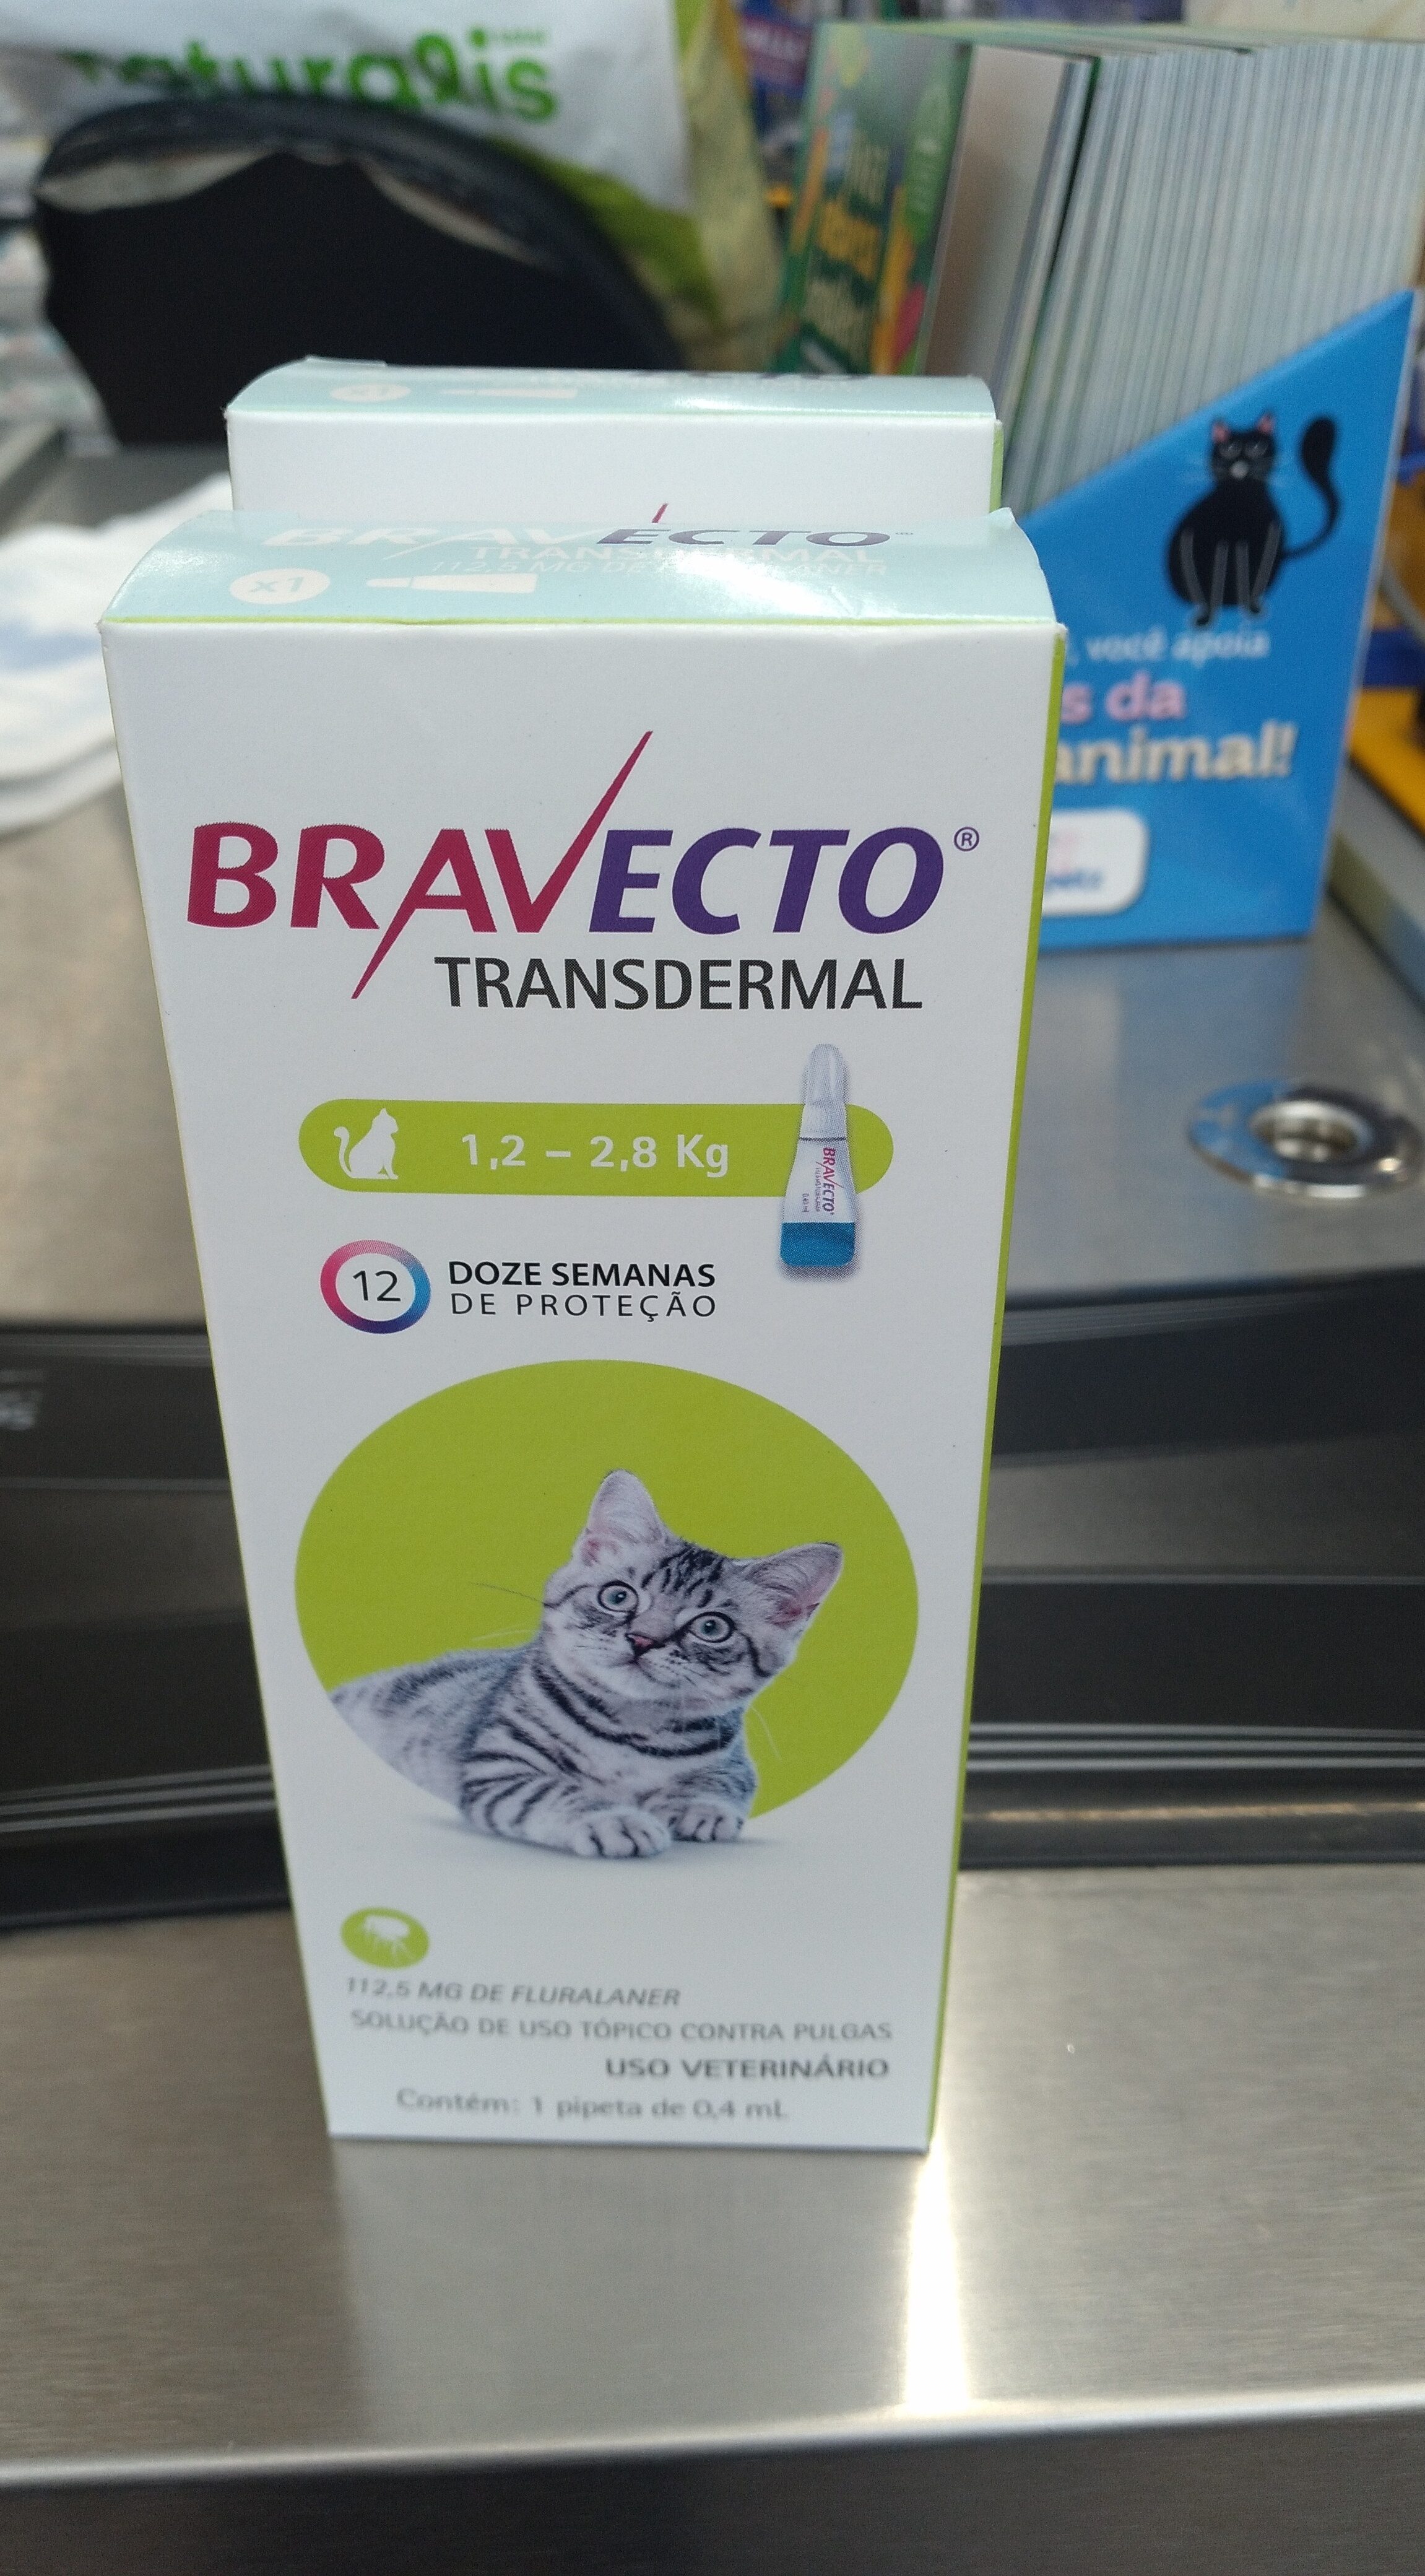 Bravecto transdermal 1,2 - 2,8kg - Product - pt